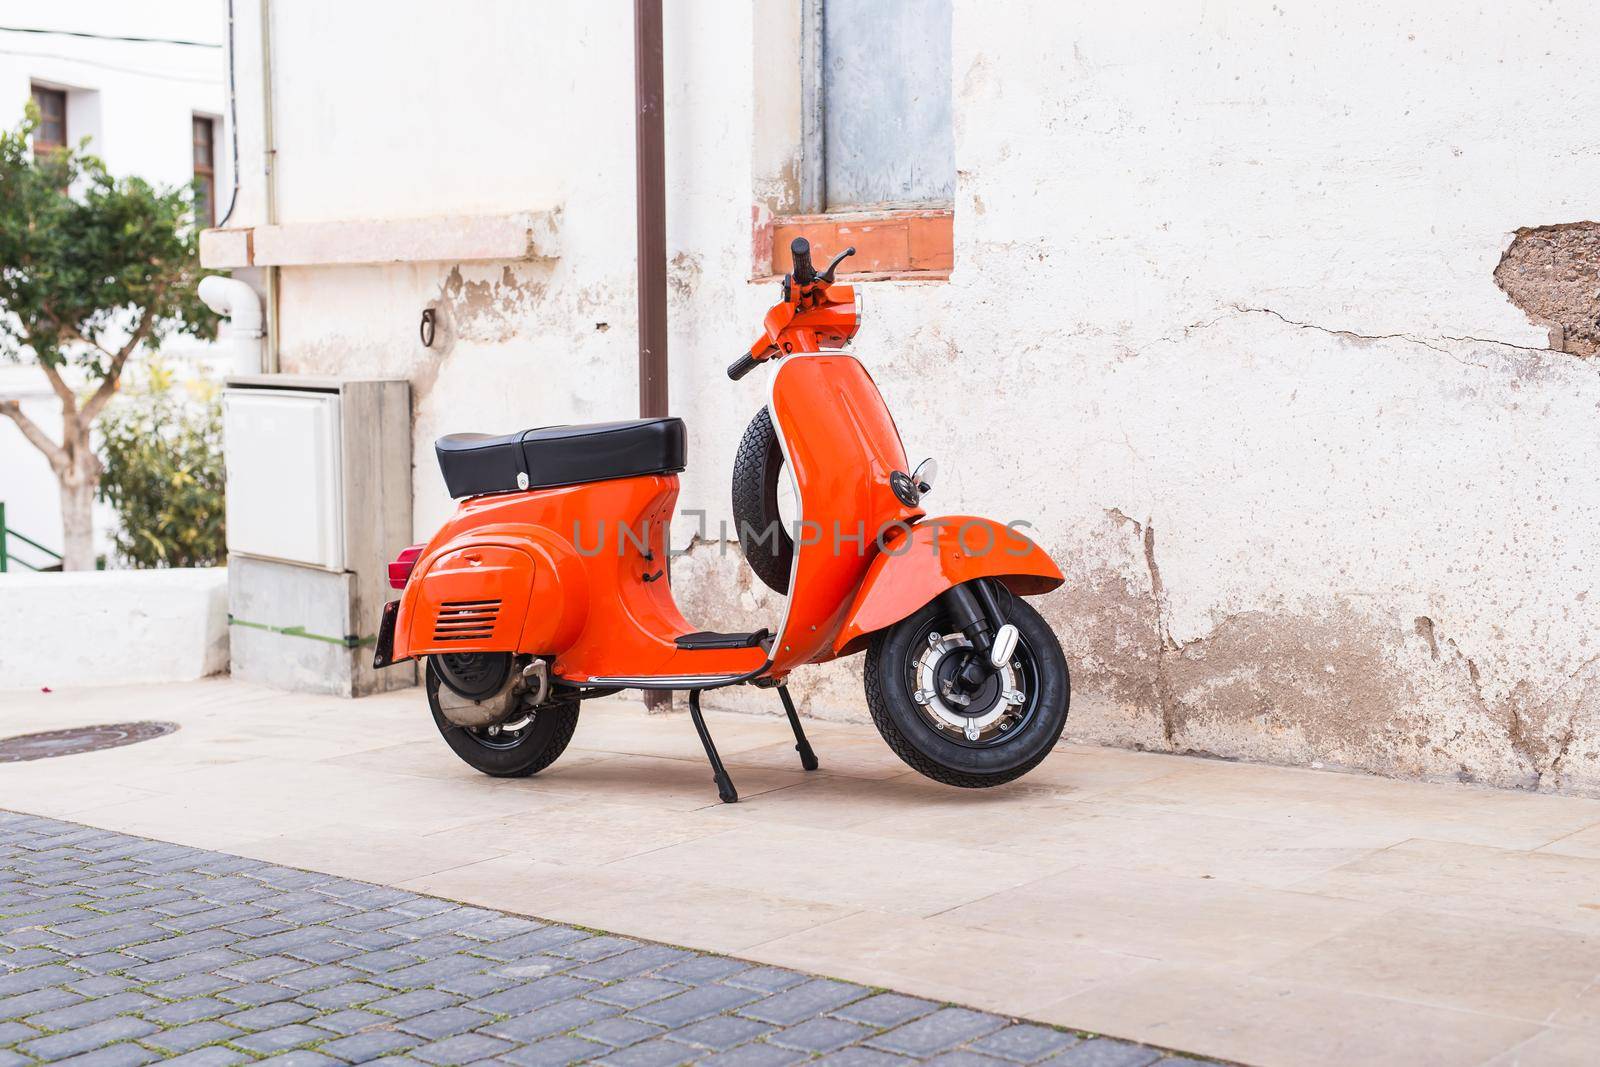 Barcelona, Spain - January 13 , 2018: Orange Scooter Vespa parked on old street in Barcelona, Spain.